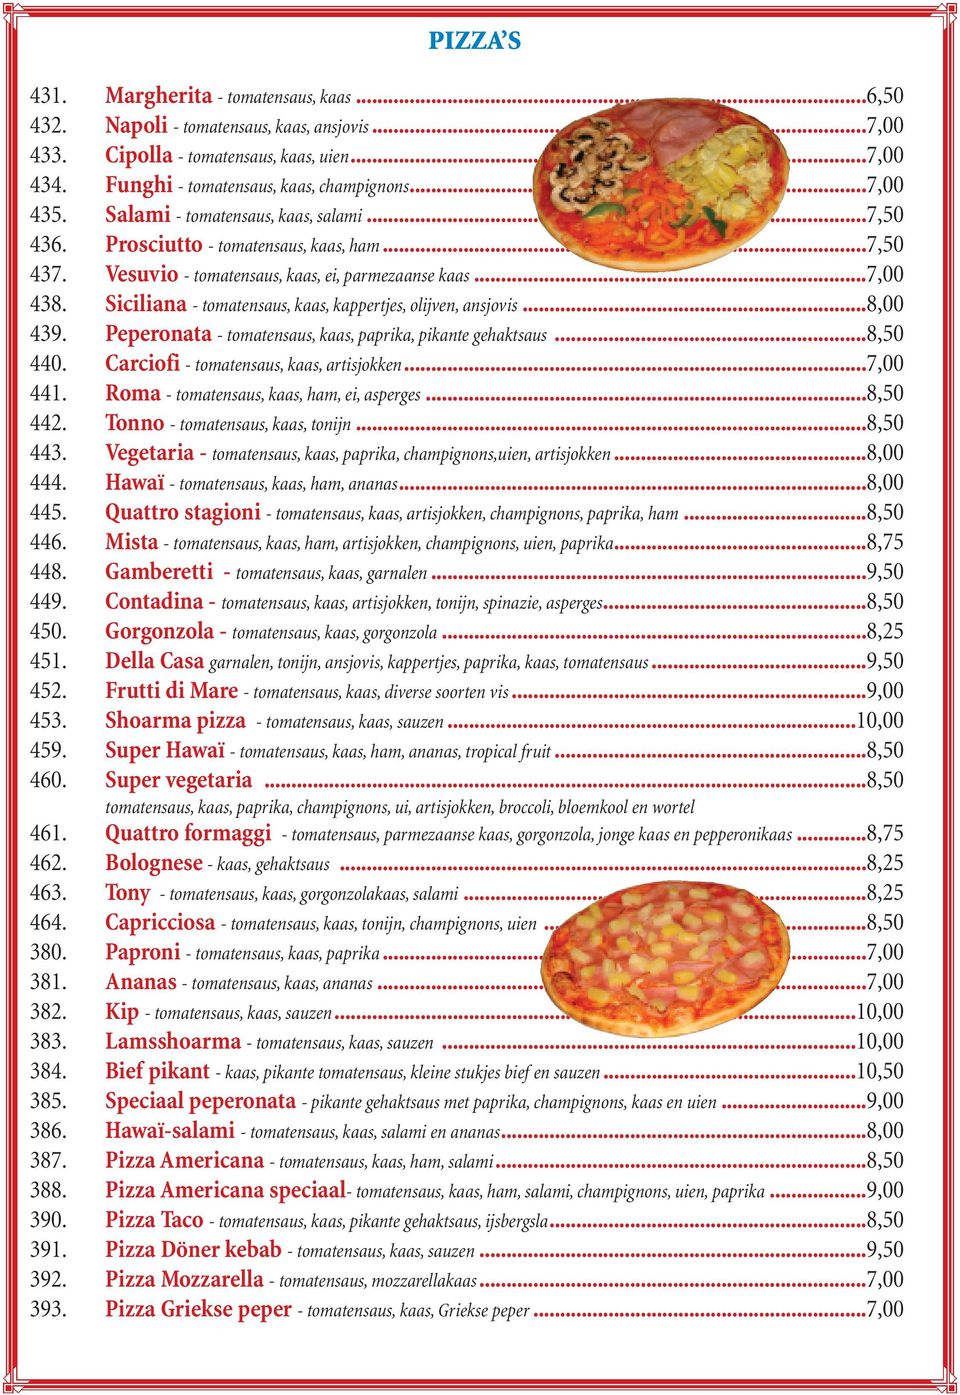 Siciliana - tomatensaus, kaas, kappertjes, olijven, ansjovis...8,00 439. Peperonata - tomatensaus, kaas, paprika, pikante gehaktsaus...8,50 440. Carciofi - tomatensaus, kaas, artisjokken...7,00 441.